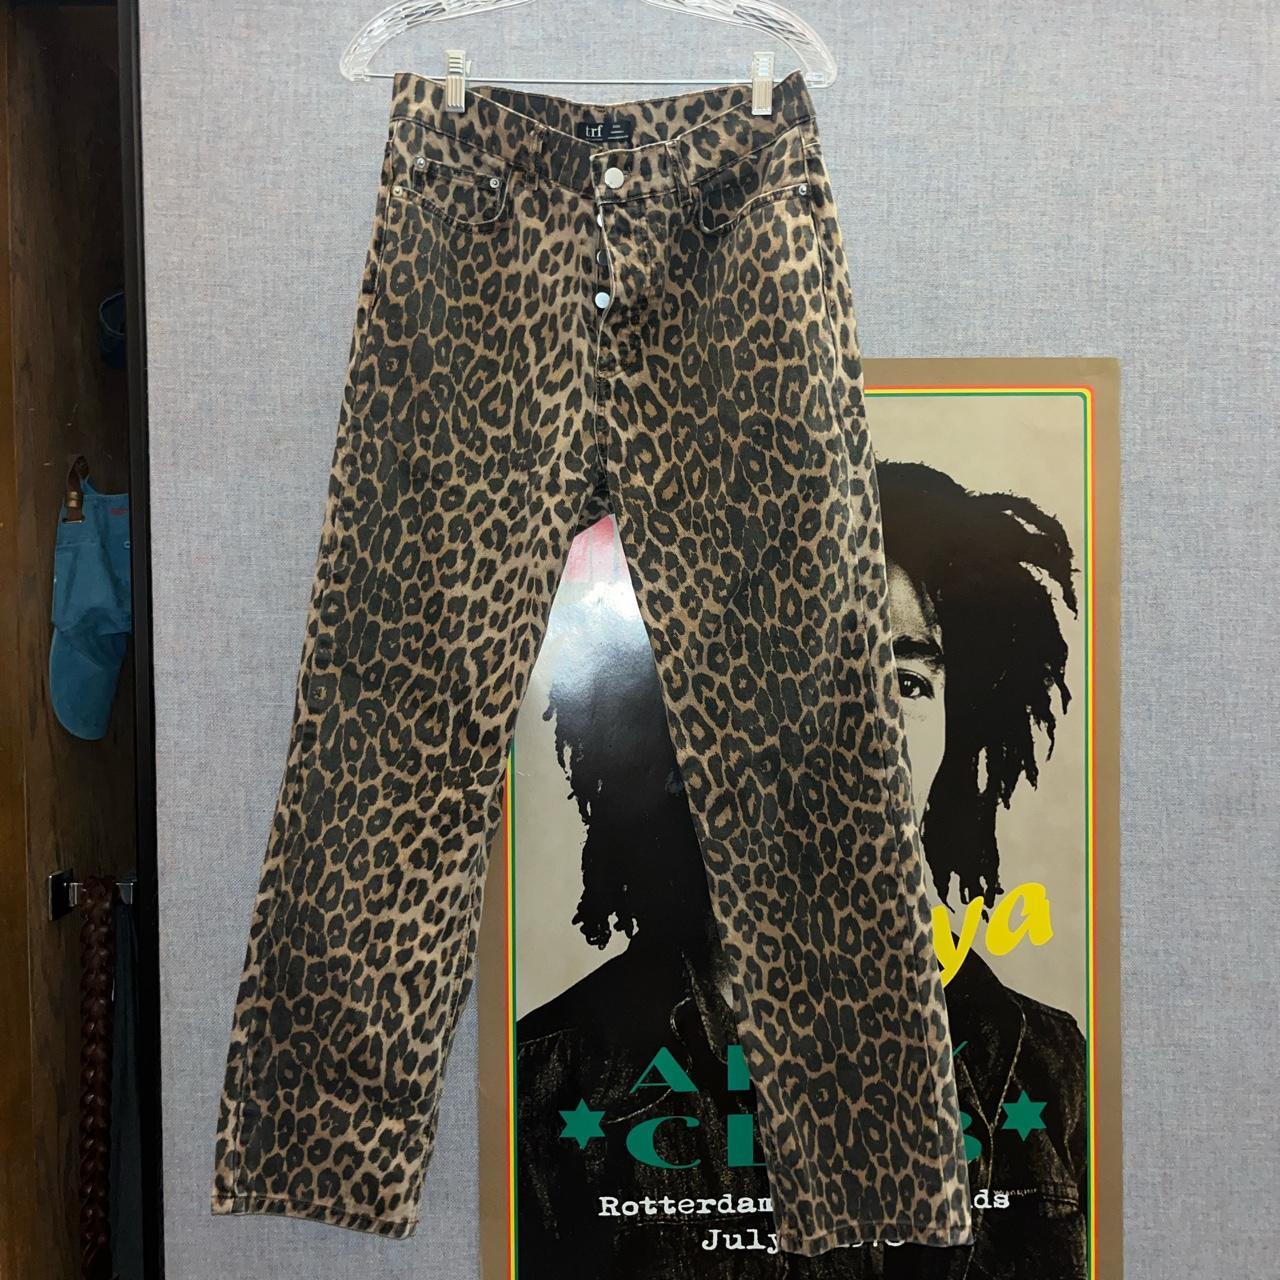 Balance cheetah print leggings🤍🖤 I'm 5'7 for - Depop